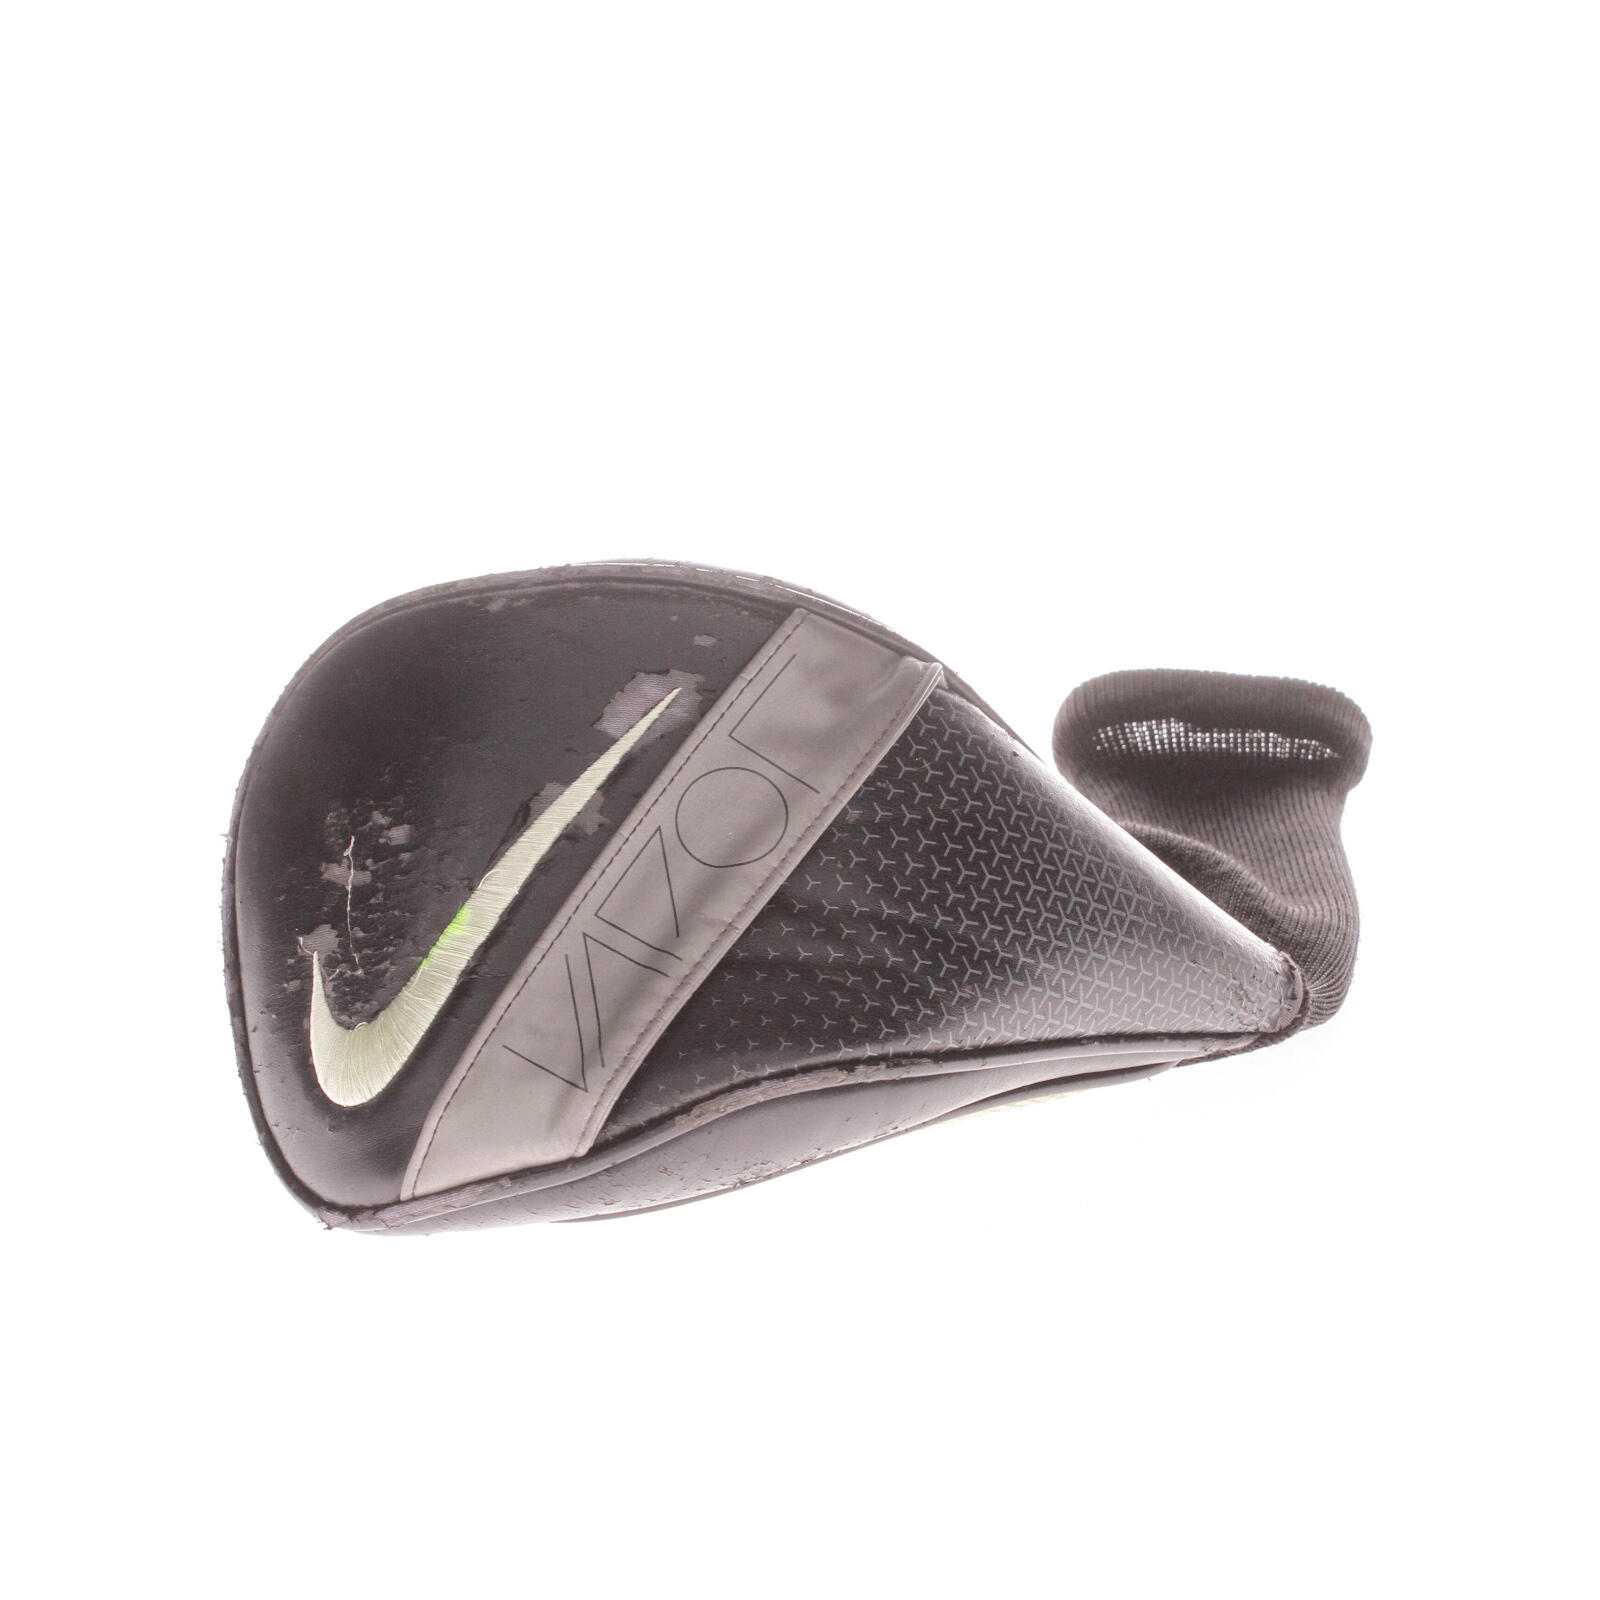 USED - Driver Nike Vapor Speed 8*-12* Degree Graphite Shaft Right Hand - GRADE B 7/7